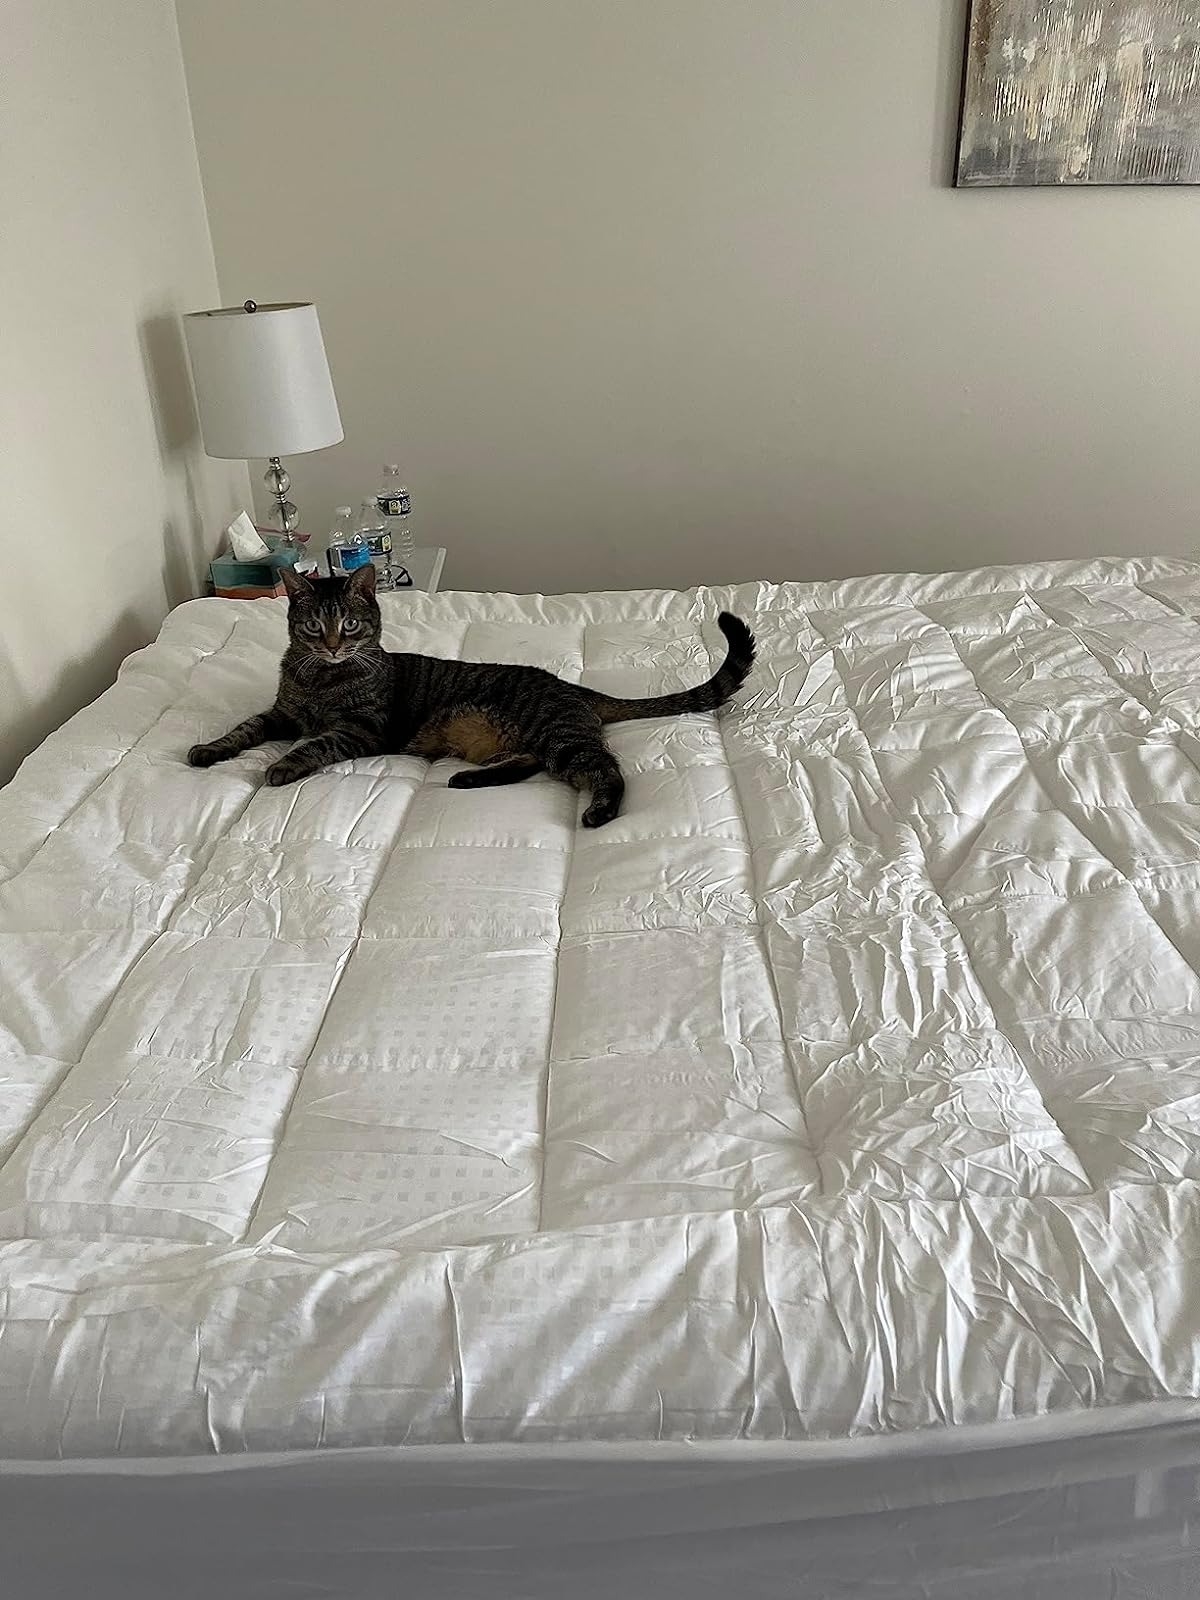 Cat lying on the mattress topper.